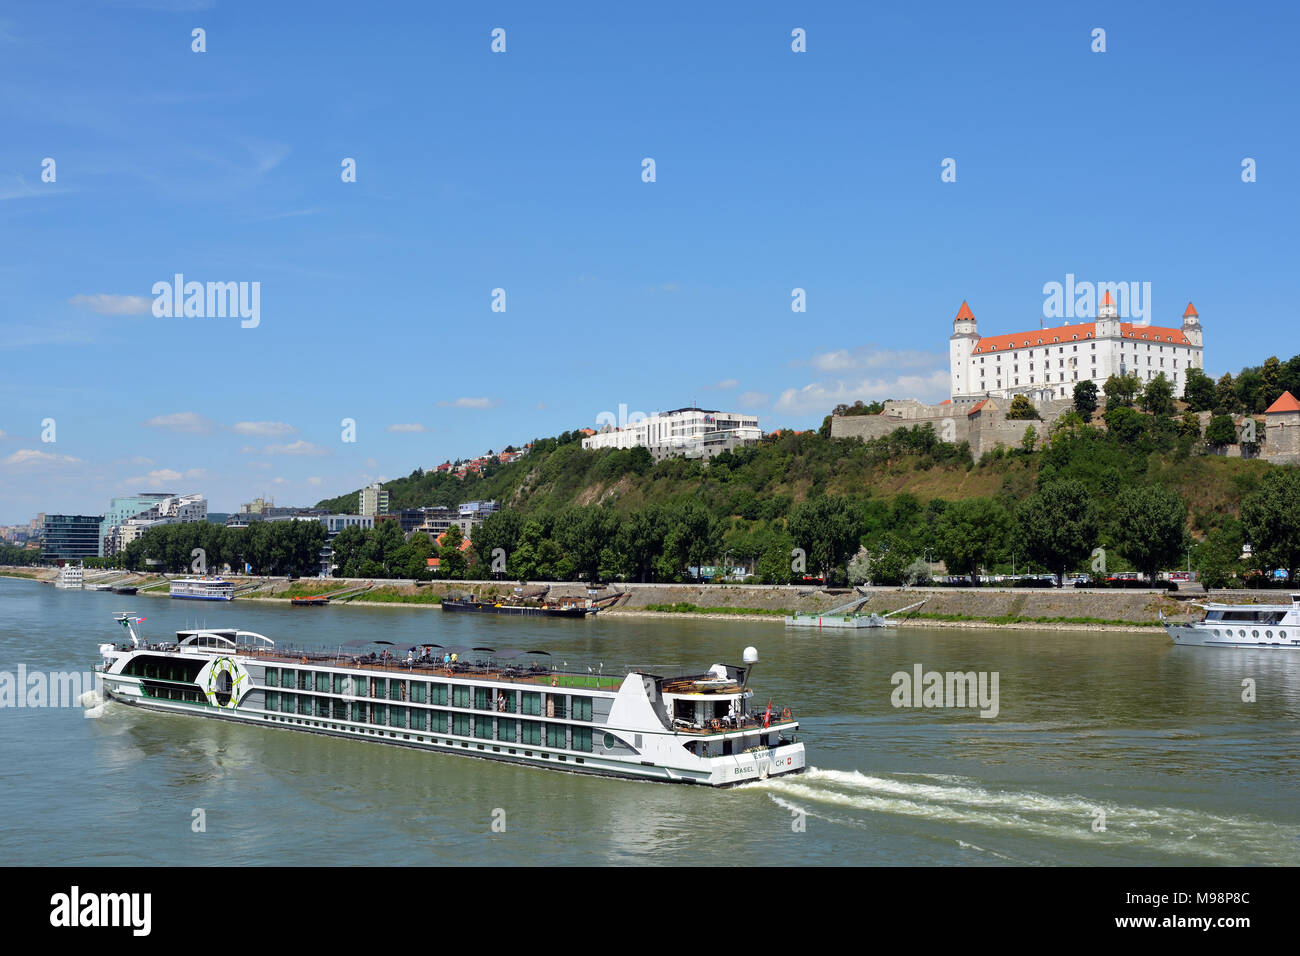 Bratislava, Slovakia - June 14, 2017: Passenger ship on the Danube in front of the castle castle in the Slovak capital Bratislava - Slovakia. Stock Photo